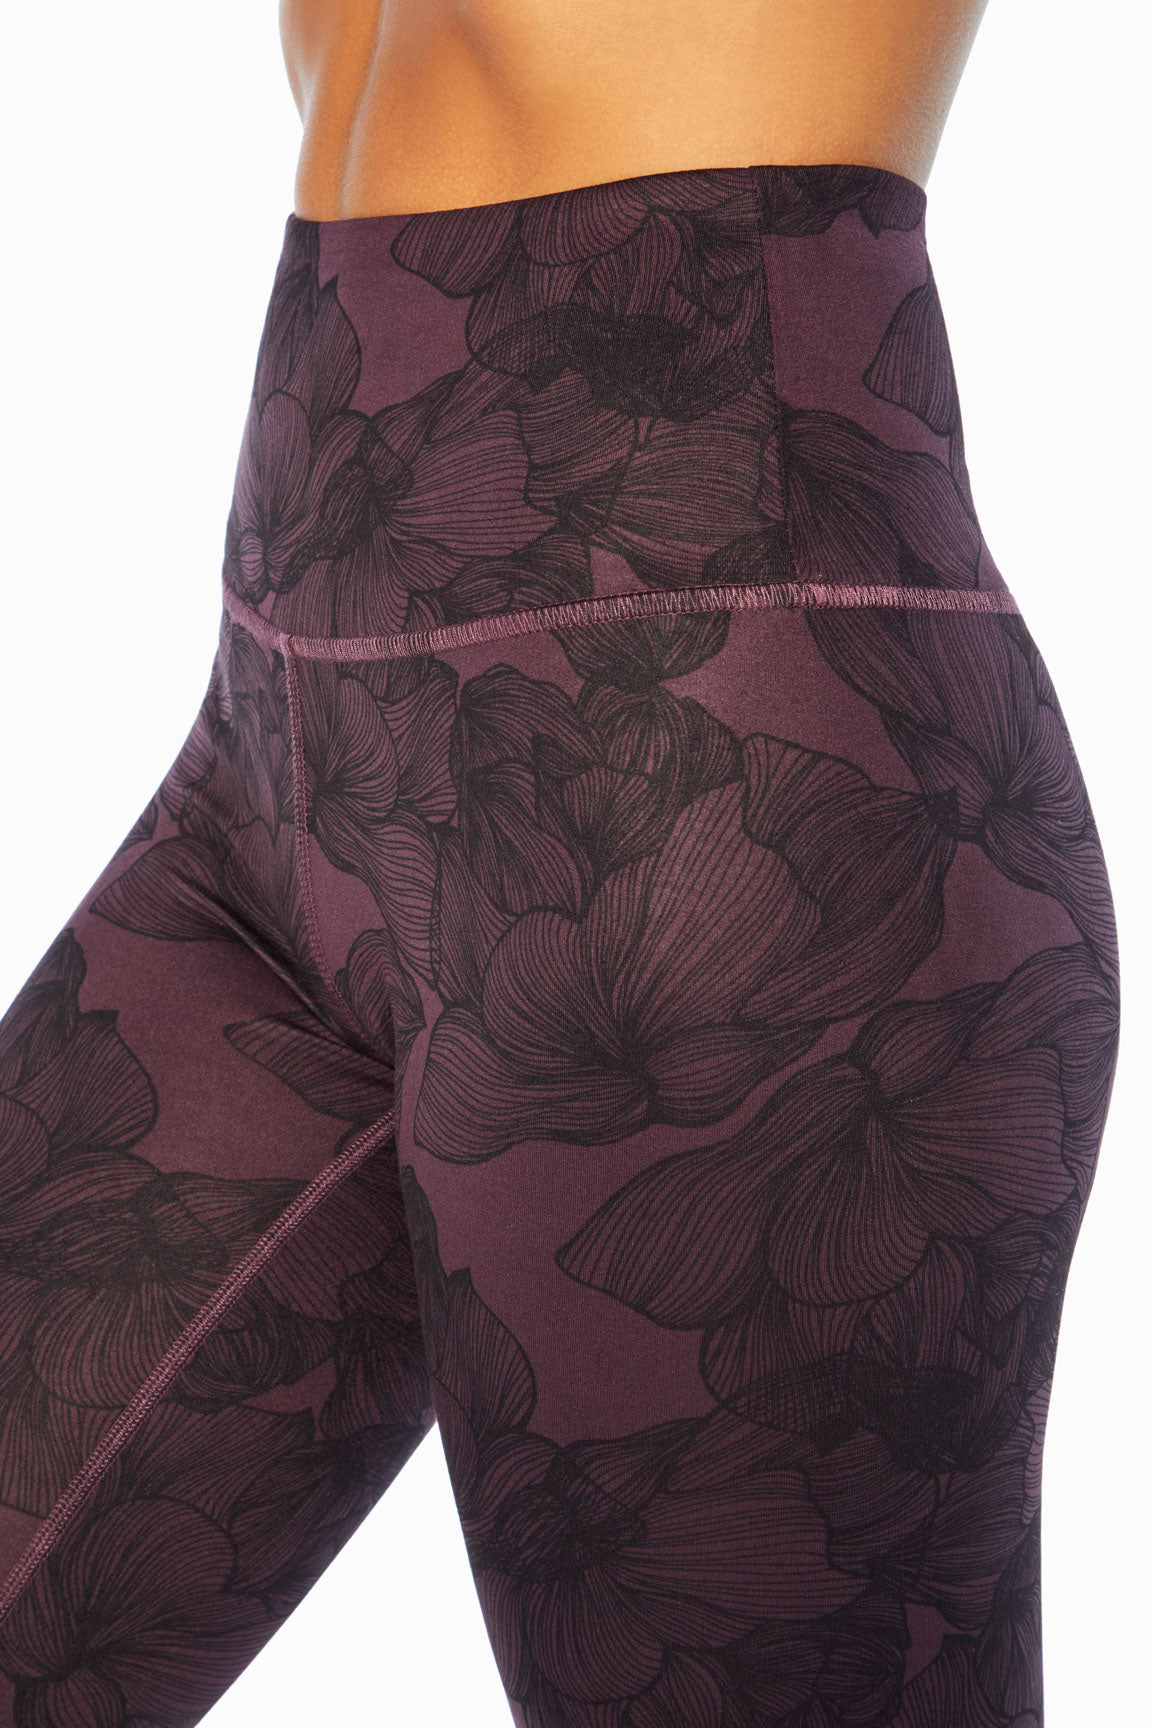 Marika Balance Collection Tie Dye Watercolor Leggings 137013 Women's Small